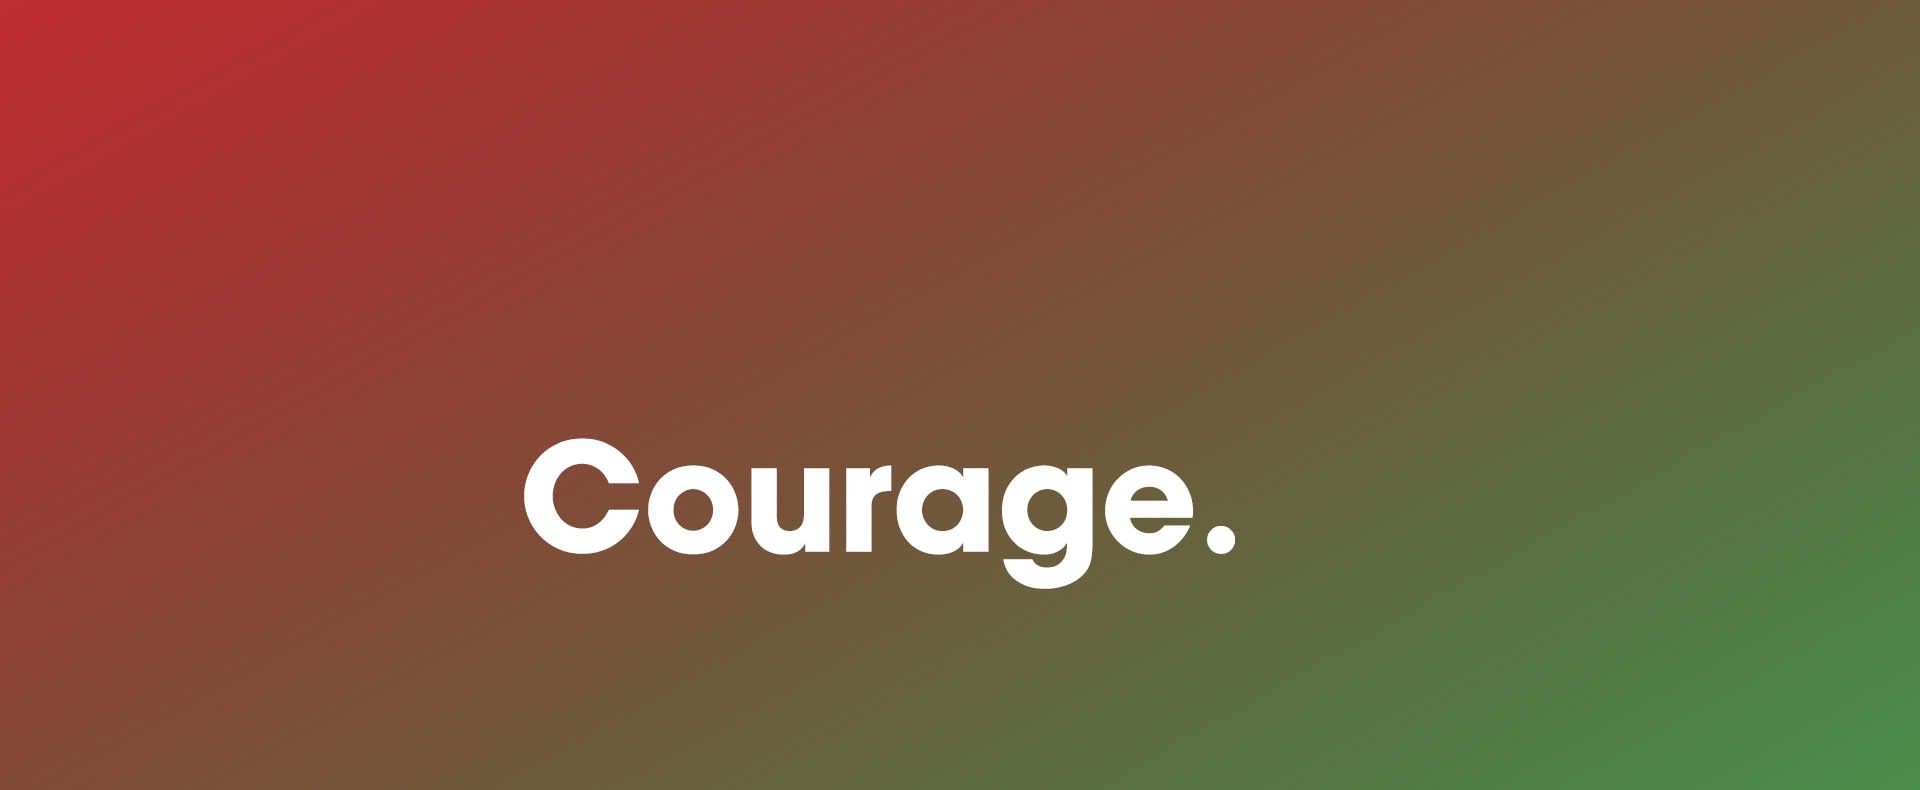 Delayed Freedom - Courage